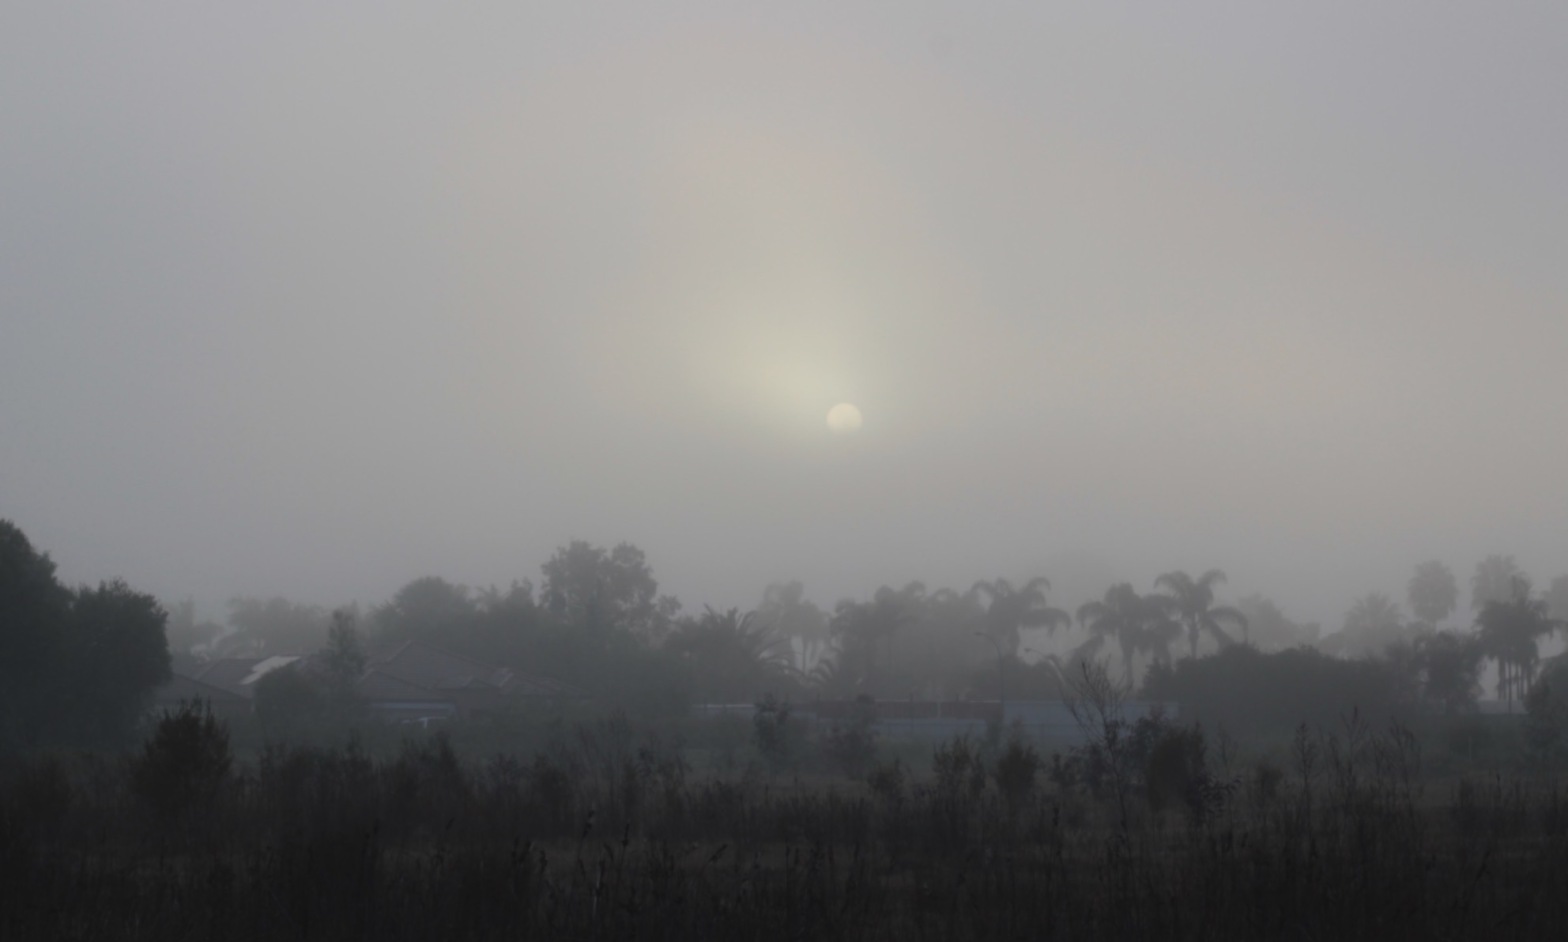 morning fog photography, sunlight, peaceful nature scene, debiriley.com